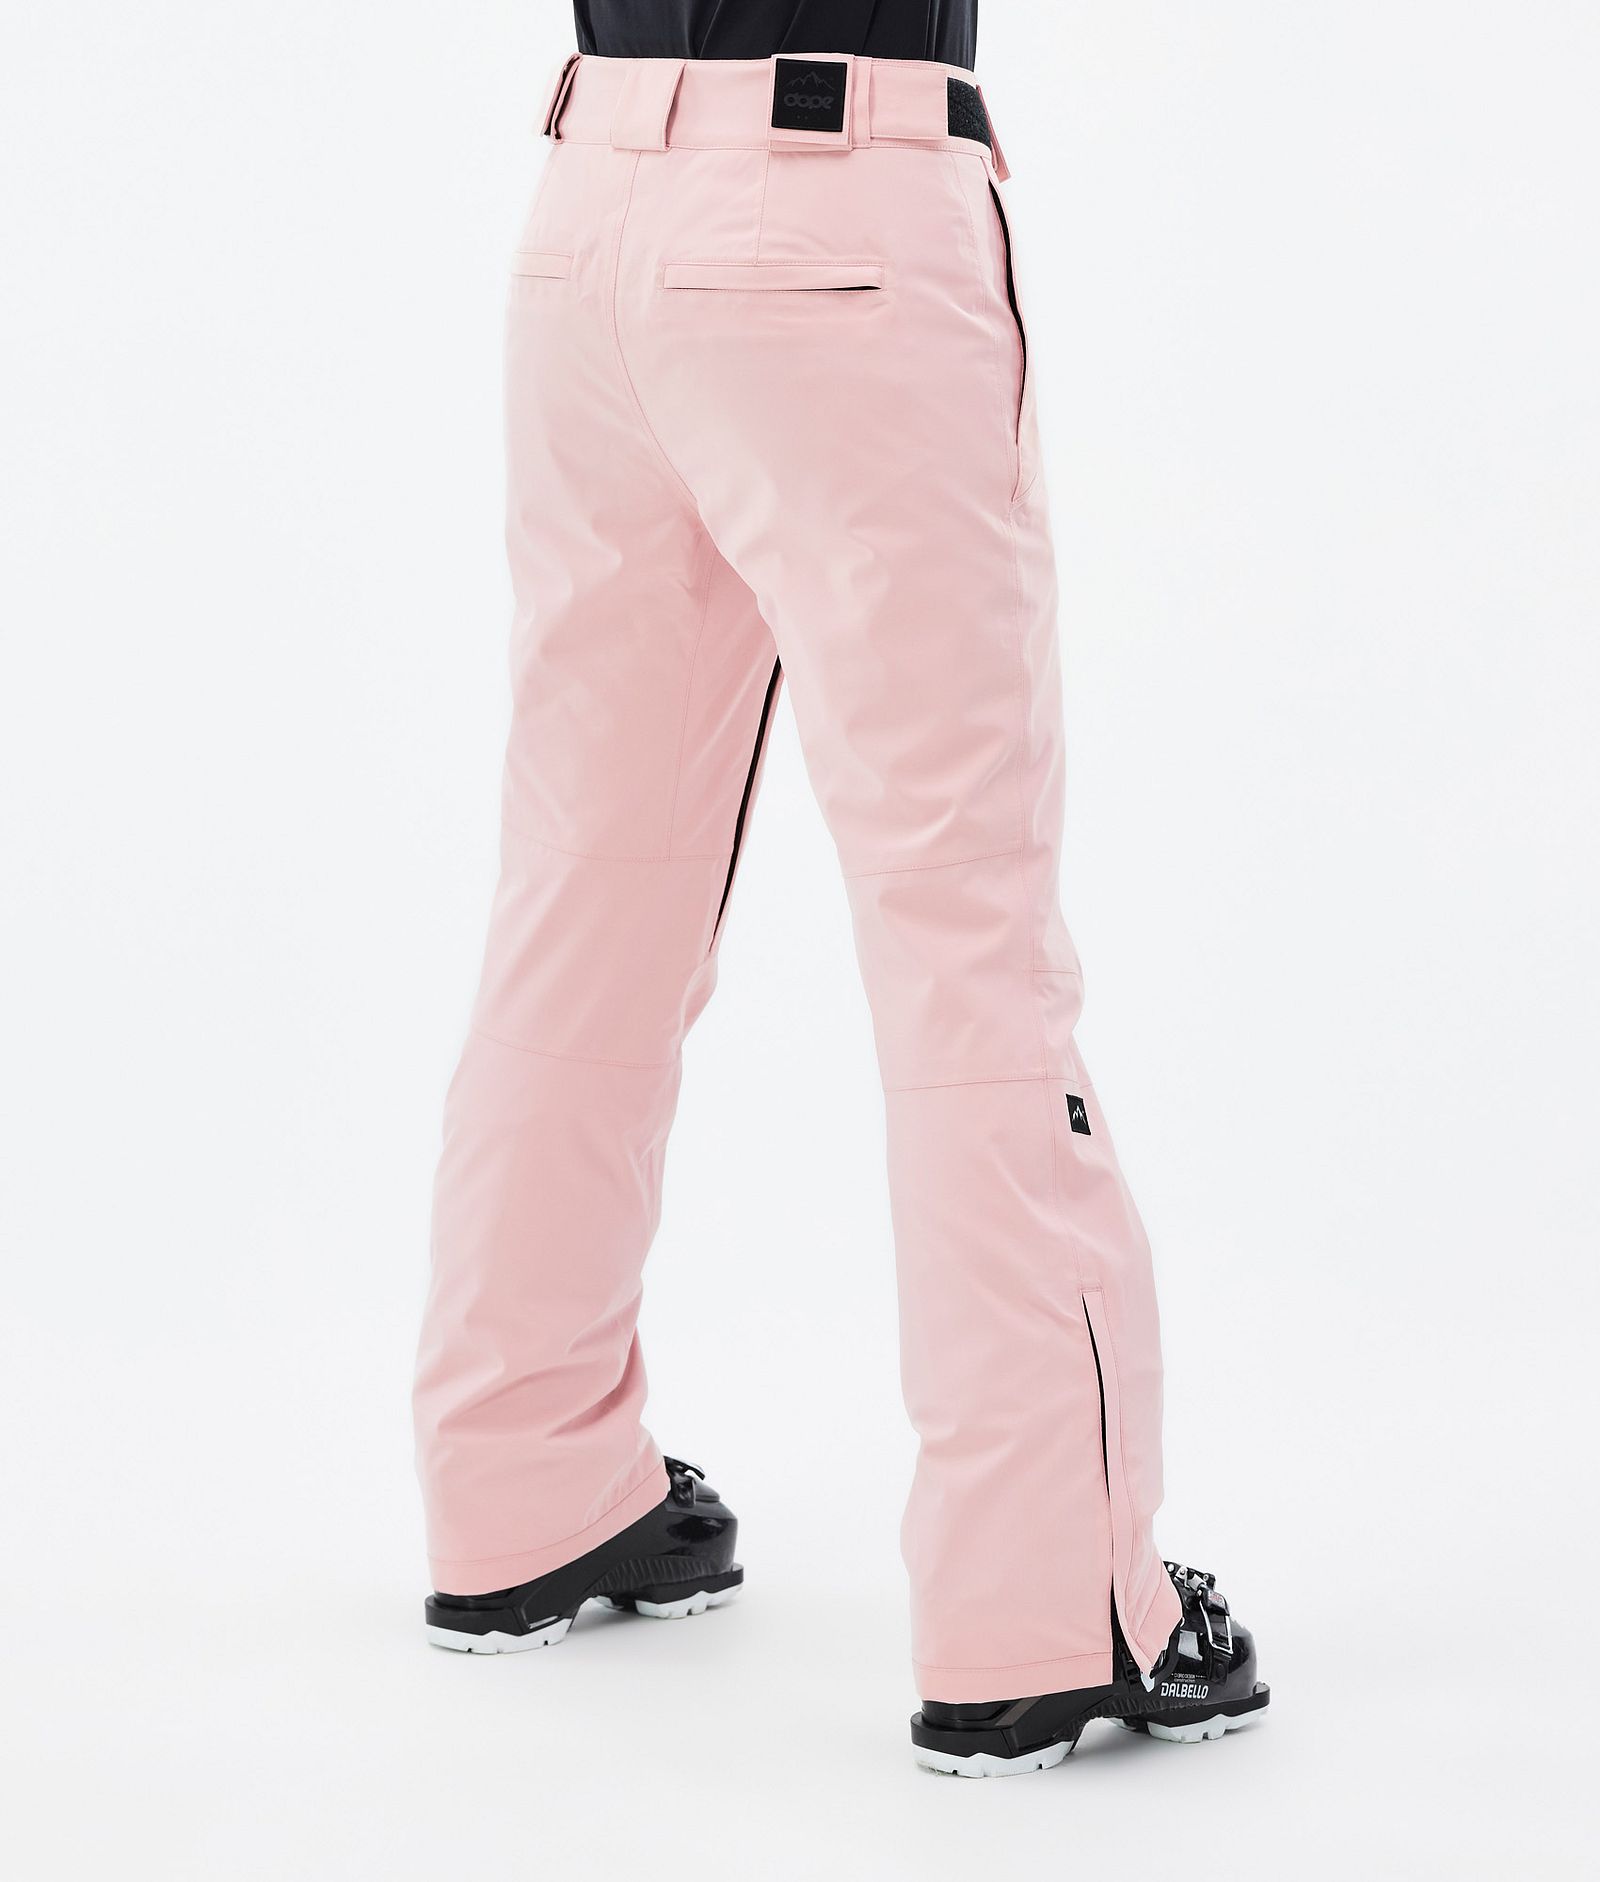 Dope Con W 2022 Skihose Damen Soft Pink - Rosa